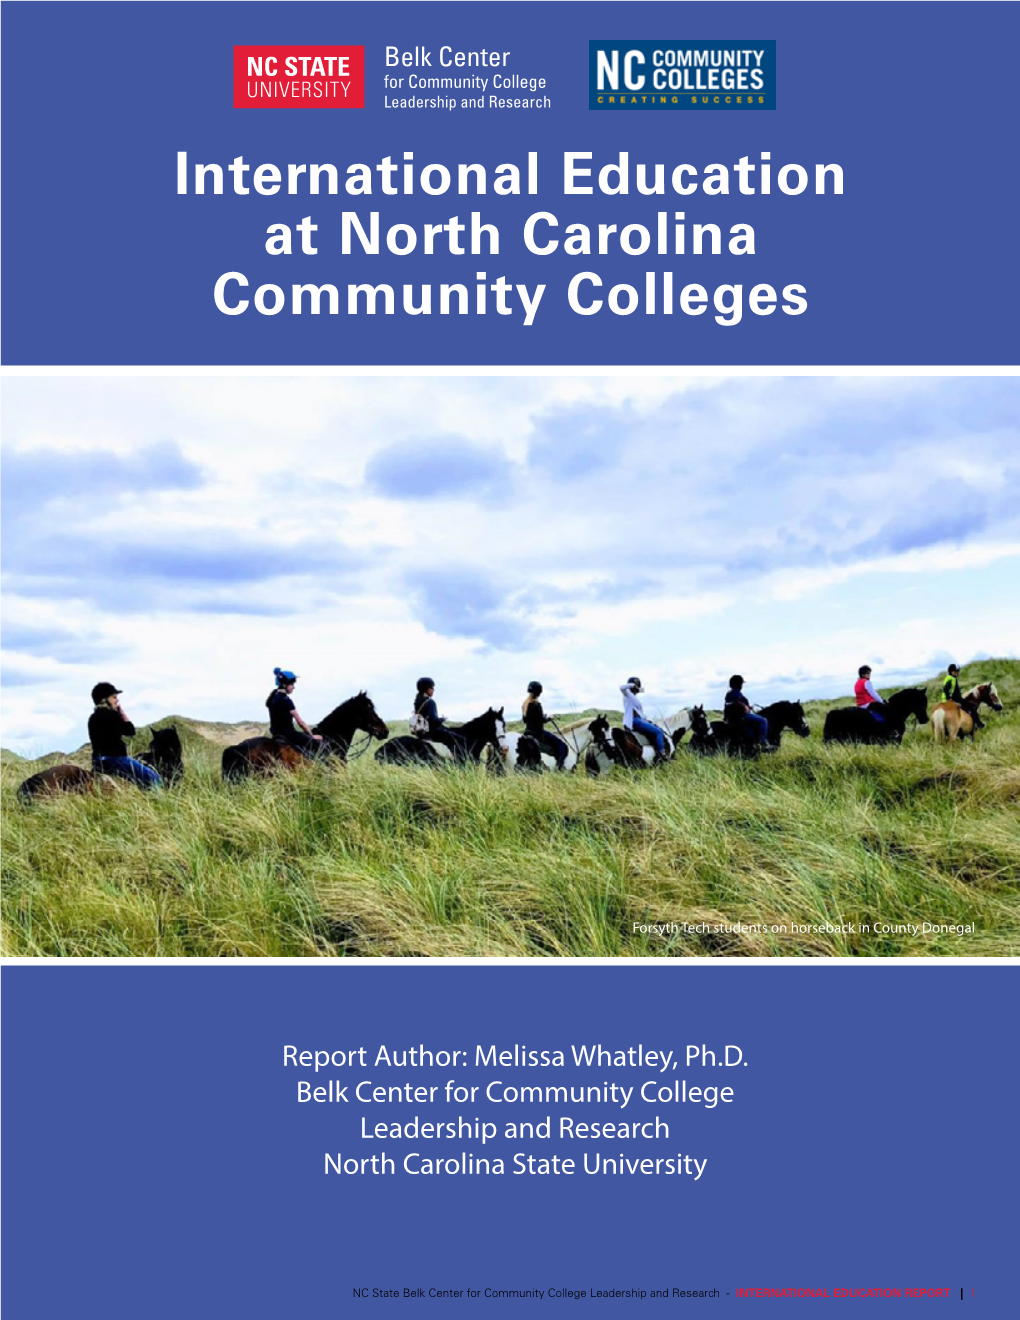 International Education at North Carolina Community Colleges